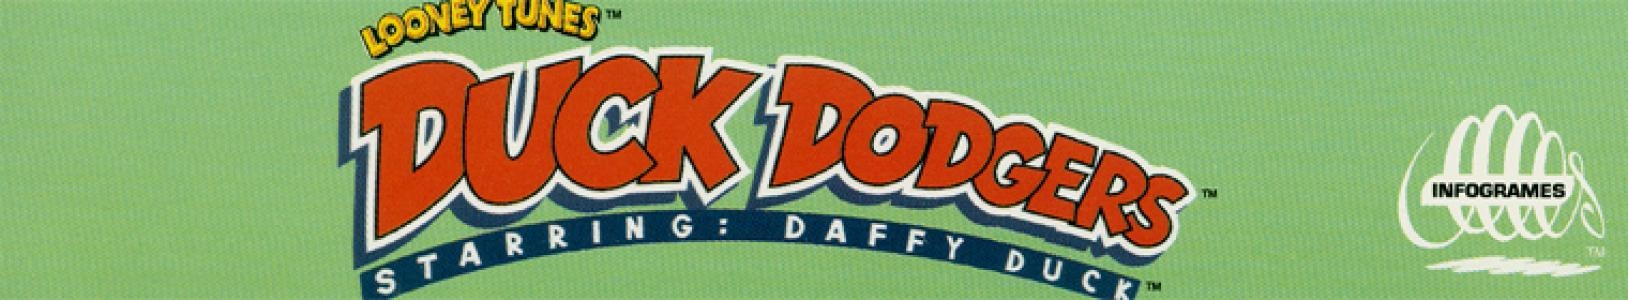 Duck Dodgers Starring Daffy Duck banner